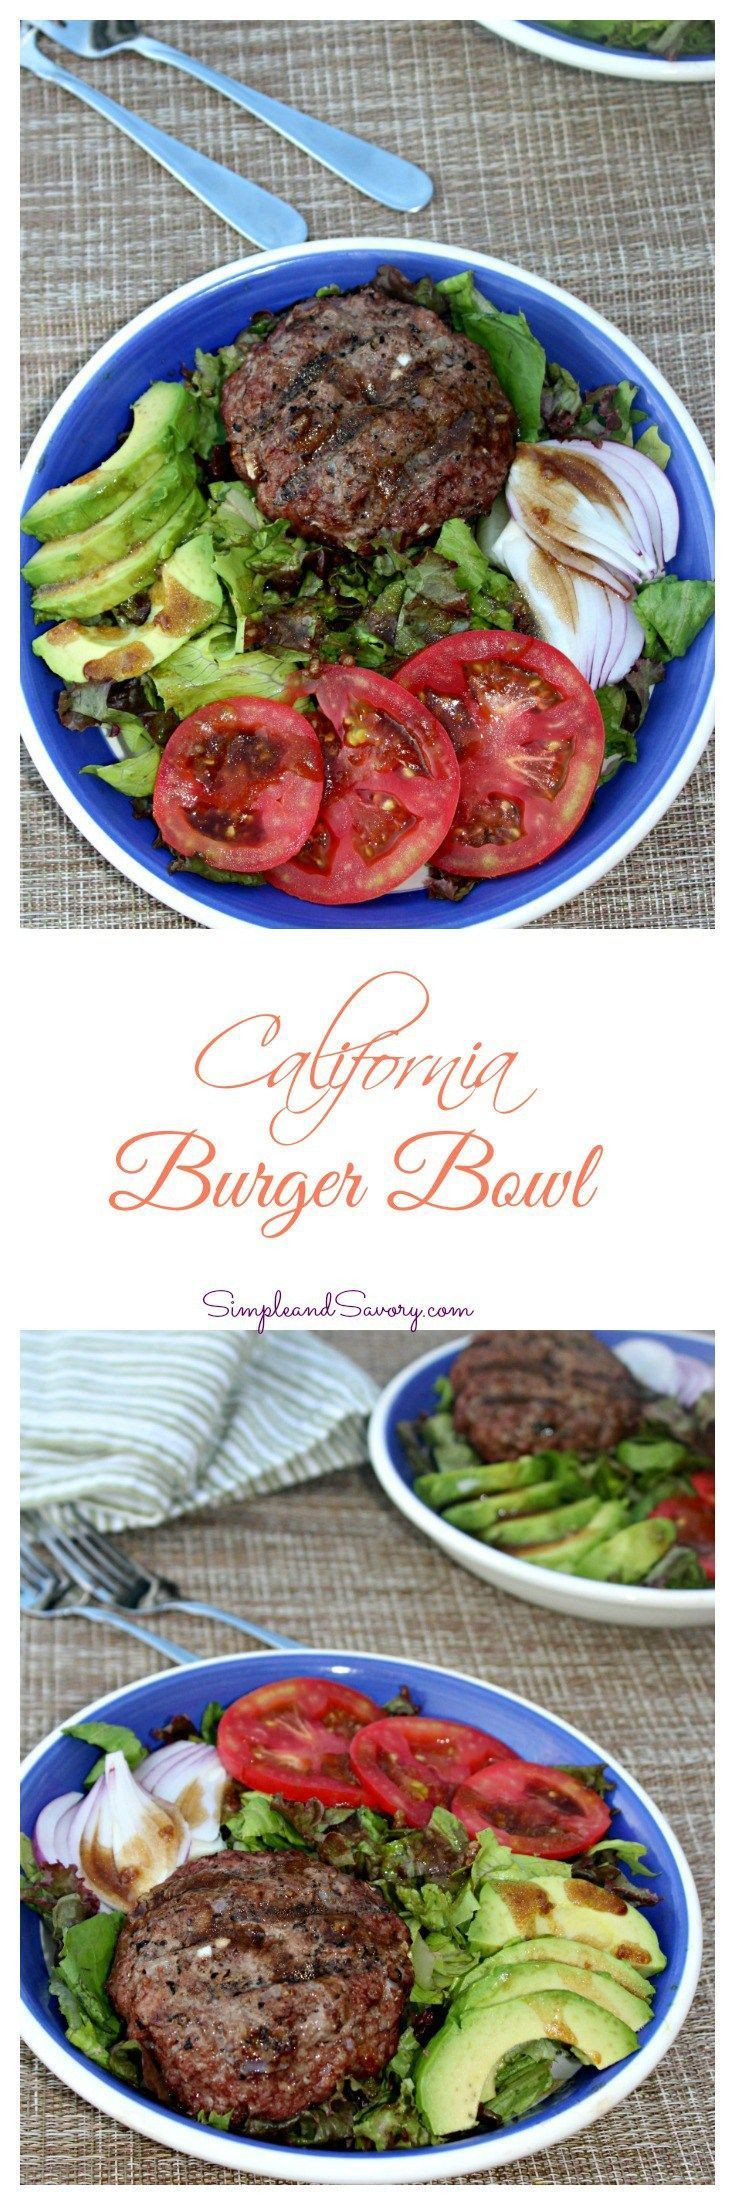 Low Carb Low Fat Recipes
 Best 25 Low carb hamburger recipes ideas on Pinterest